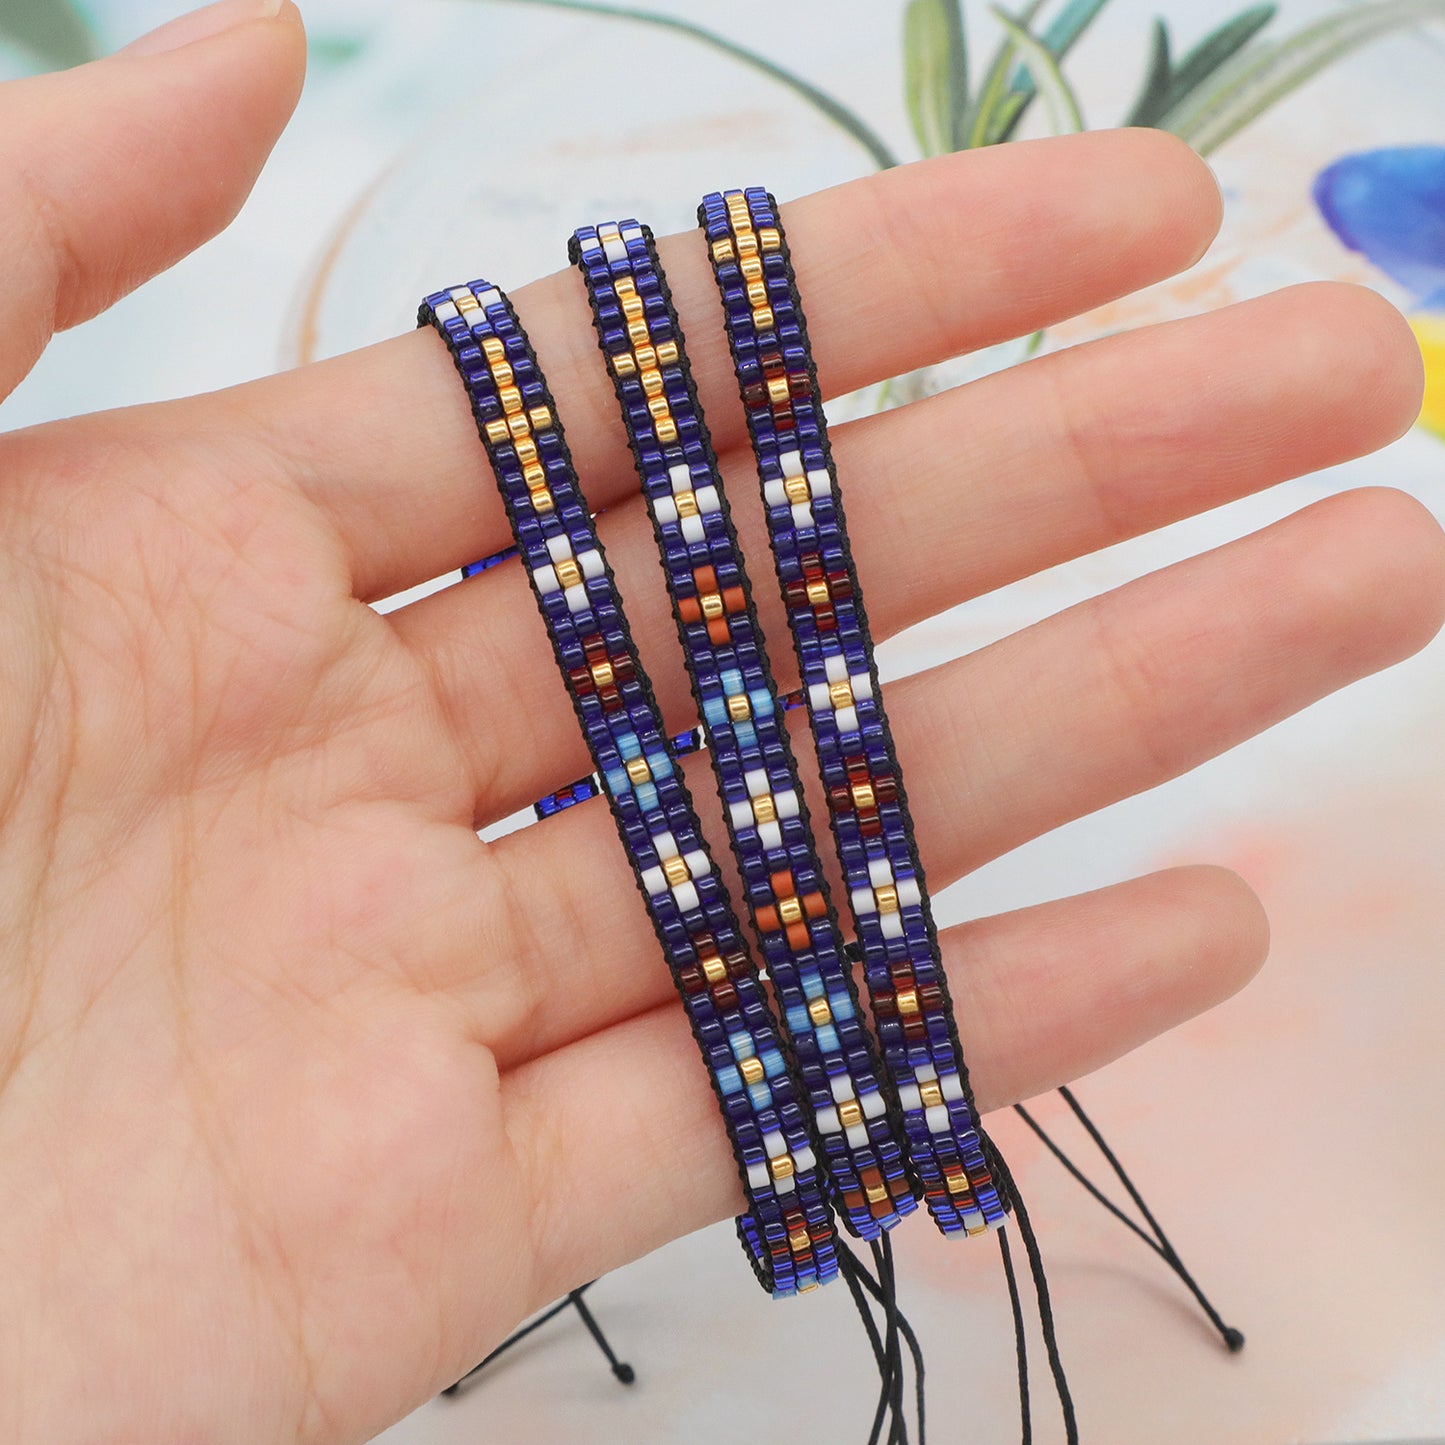 Newest Customized handmade Trendy Cross Flower miyuki bracelet bangle jewelry adjustable Miyuki Beads Bracelet for women